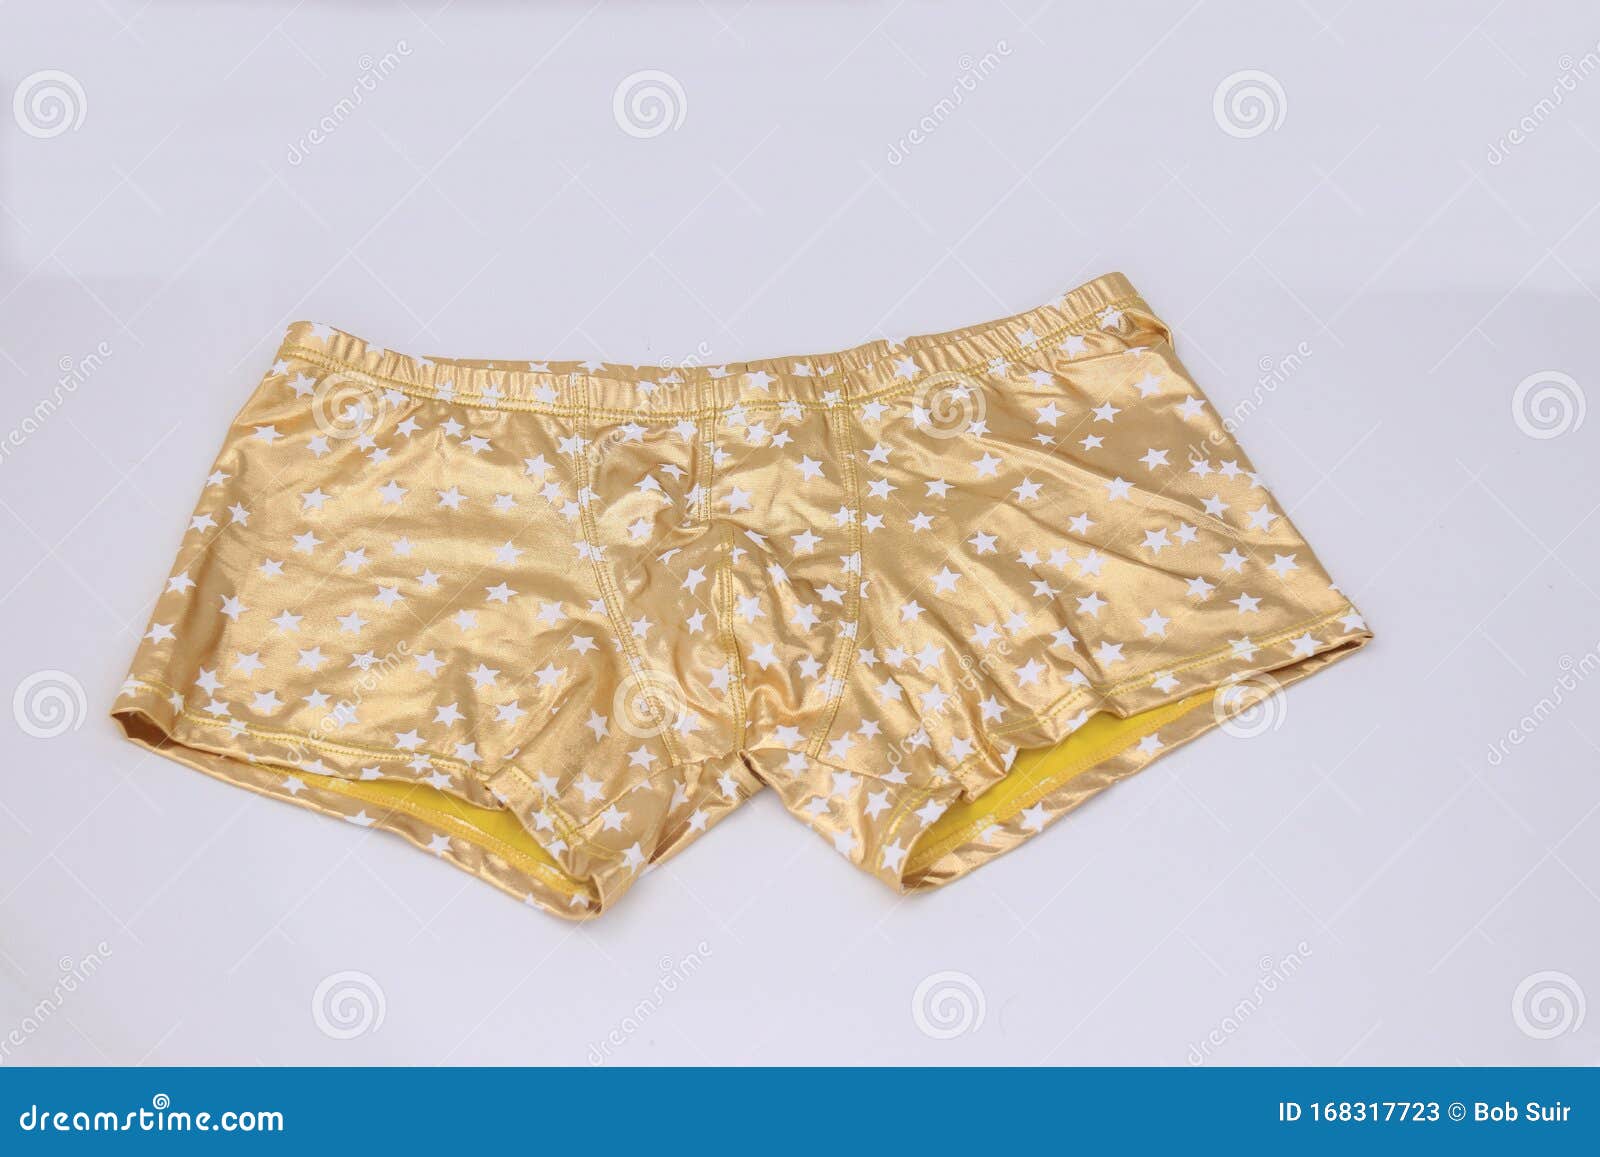 437 Sexy Men Underwear Photos - Free & Royalty-Free Stock Photos from ...